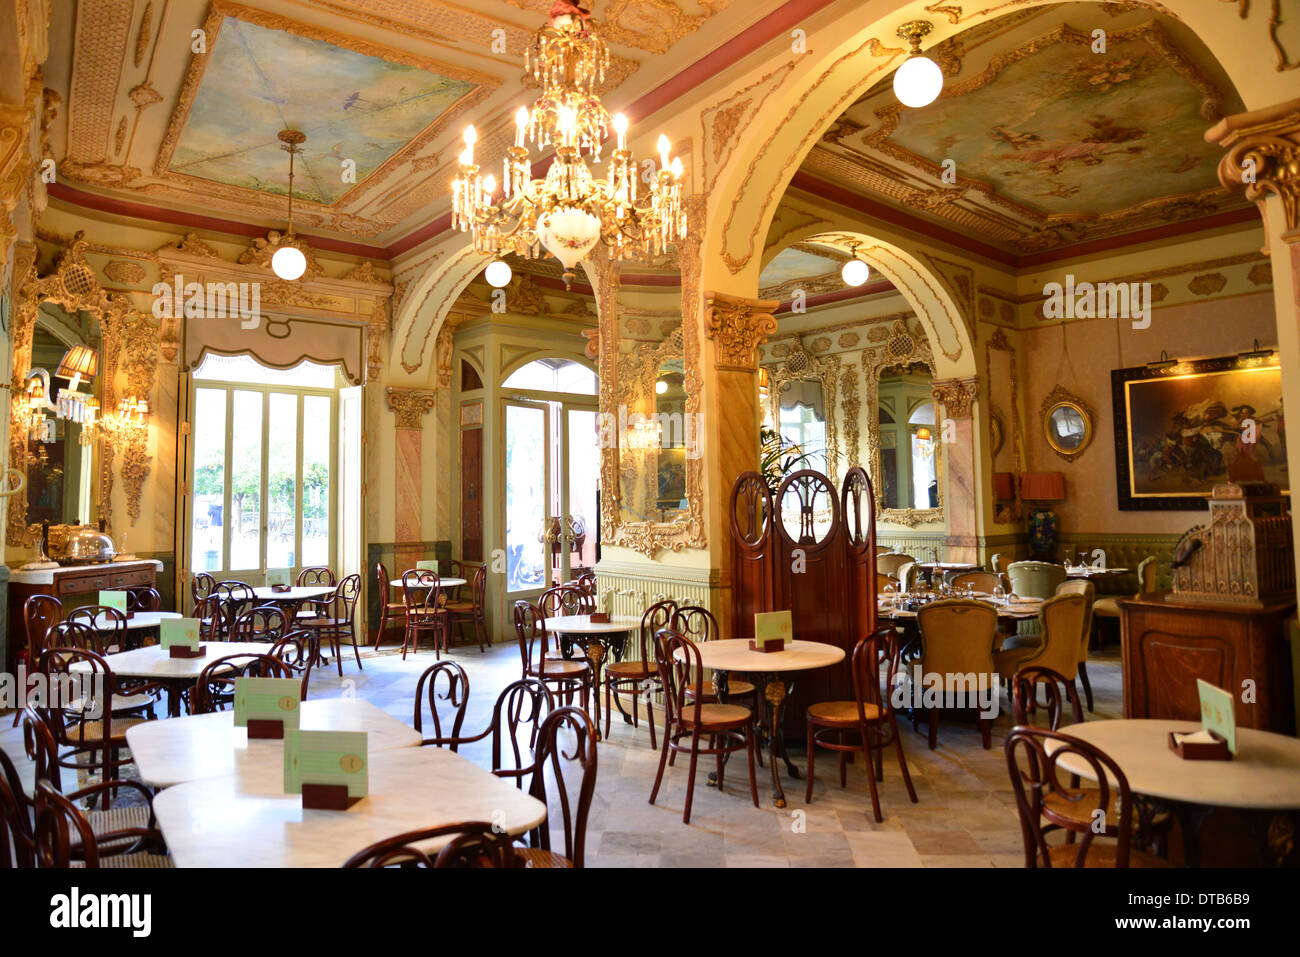 Interior of Cafe Royalty, Plaza Candelaria, Old Town, Cádiz, Cádiz Province, Andalusia (Andalucia), Spain Stock Photo